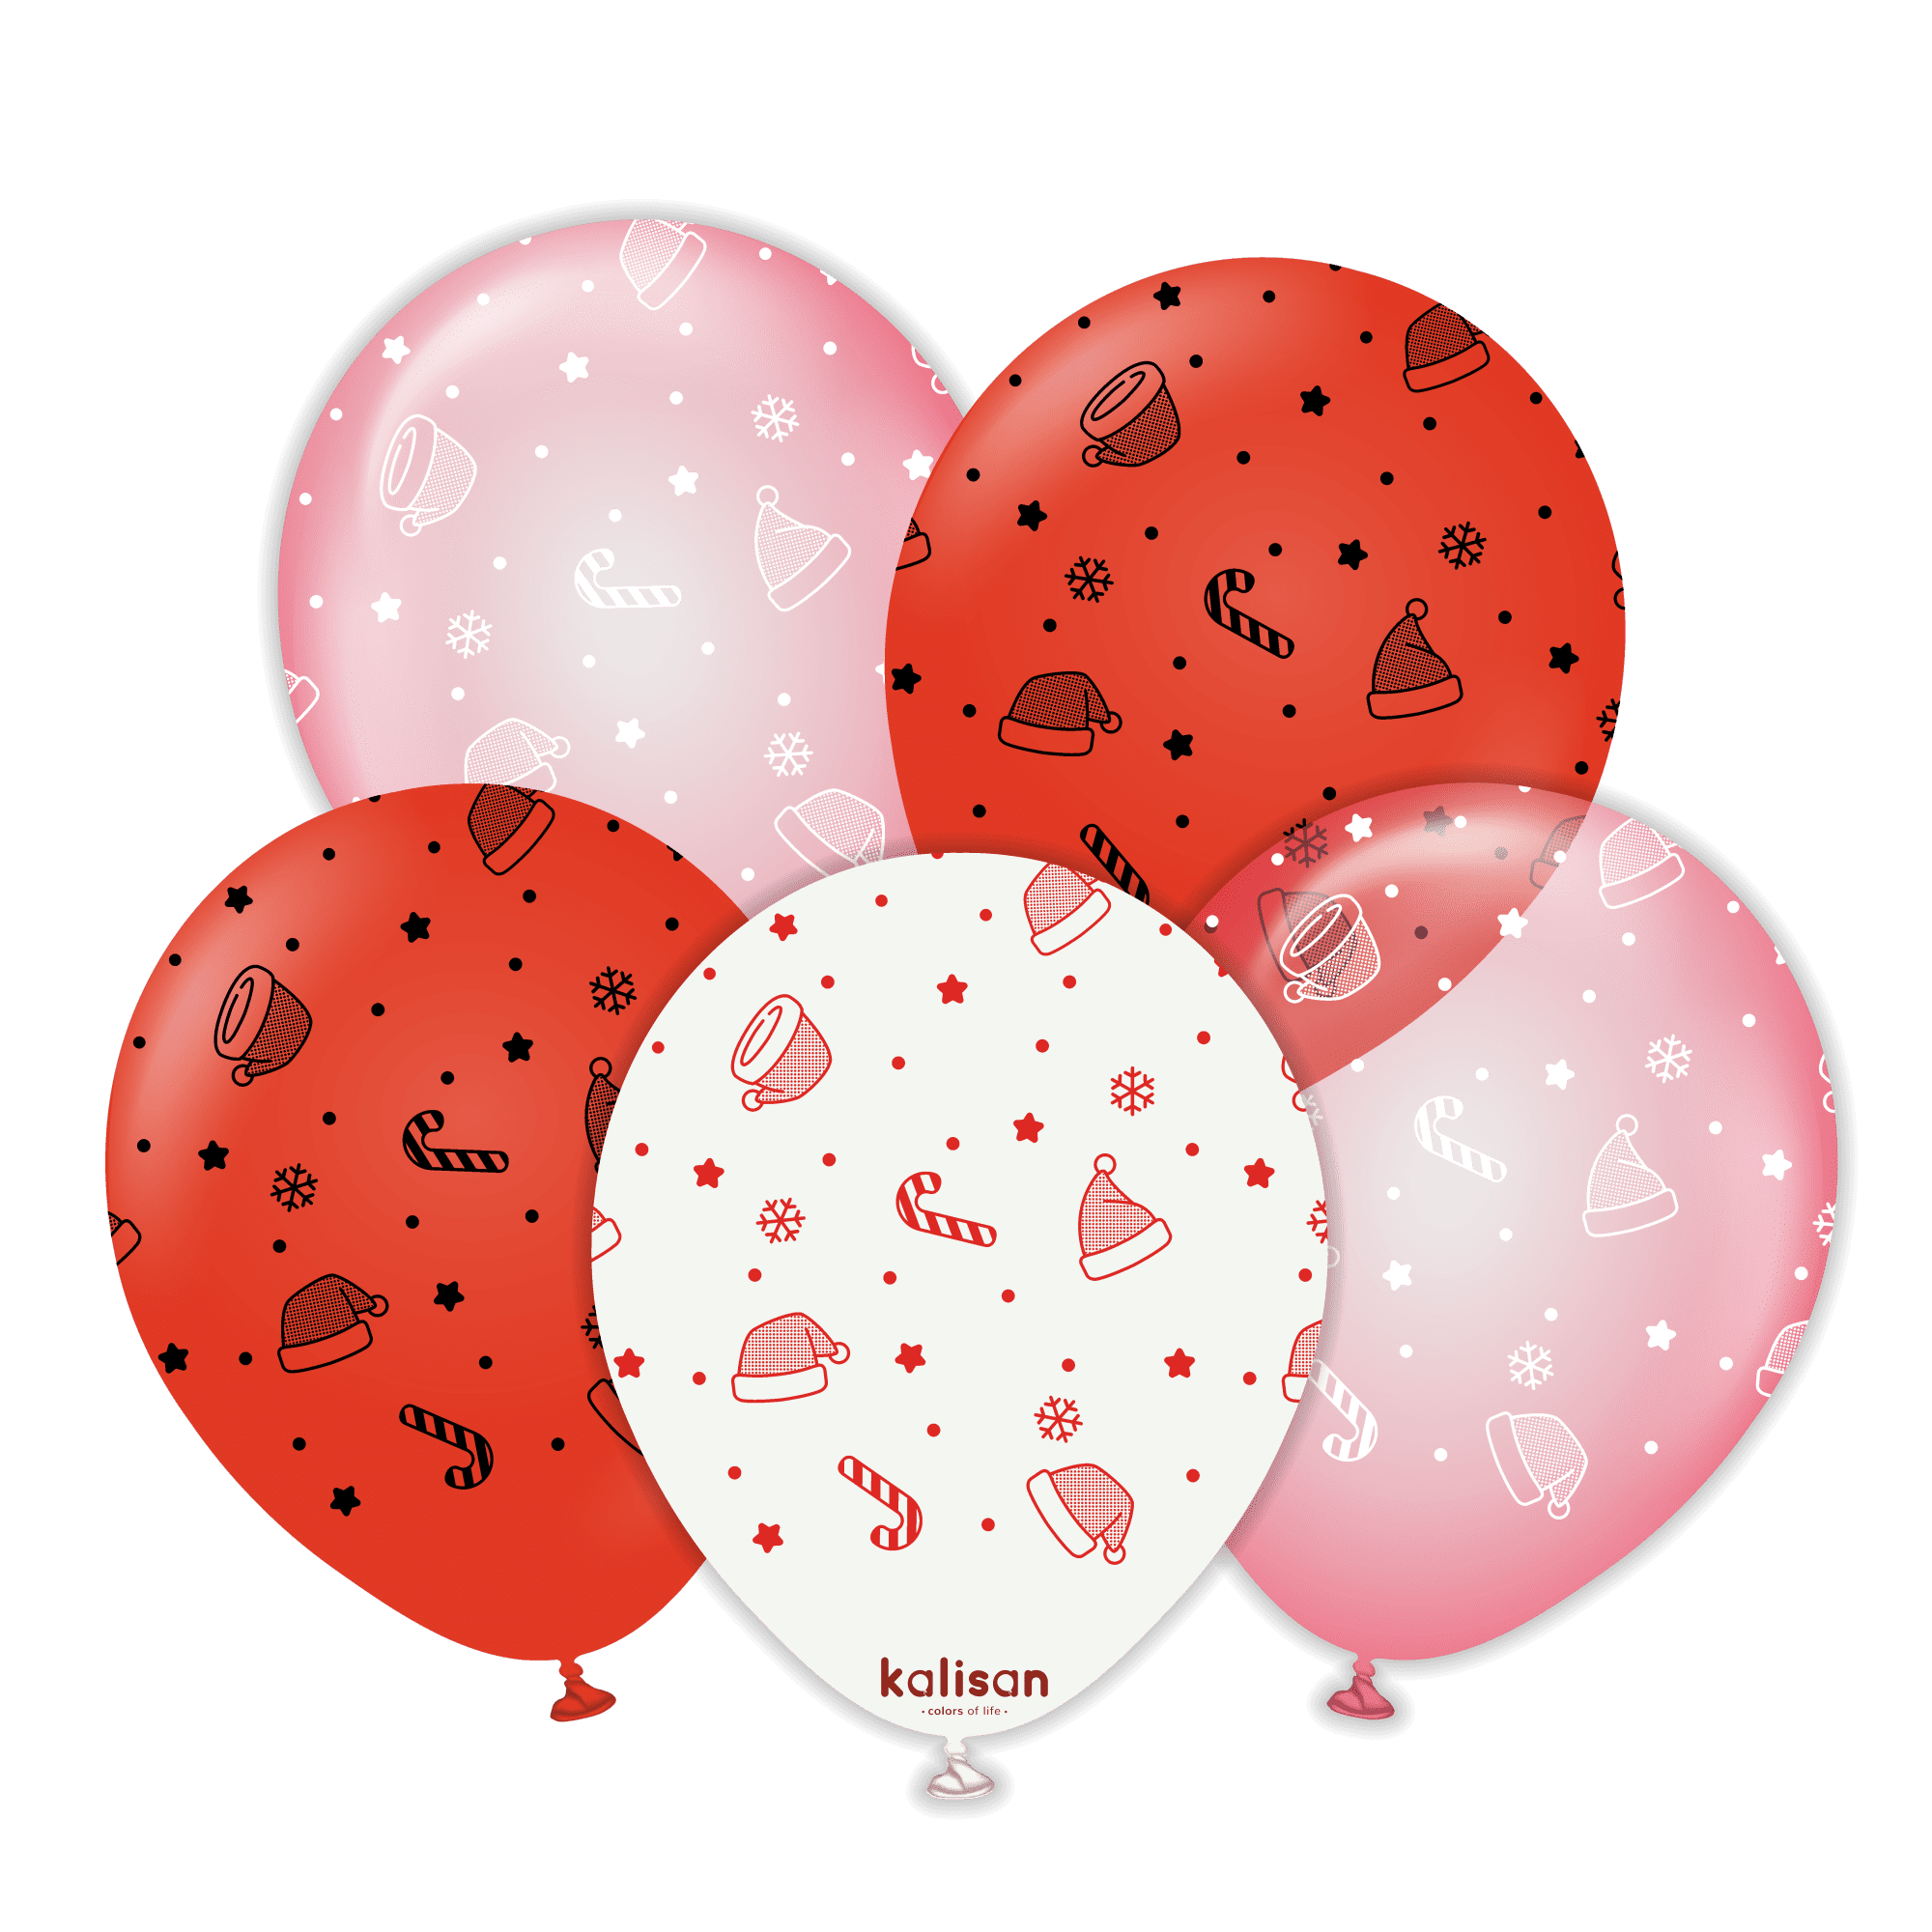 https://cdn.bargainballoons.com/products/2022-Bargain-Balloons/October-Balloons/Christmas-Balloons/Large-Balloons/21253713-12-inches-New-Year-Pattern-Kalisan-Printed-Latex-Balloons-25-Per-Bag-balloons.png